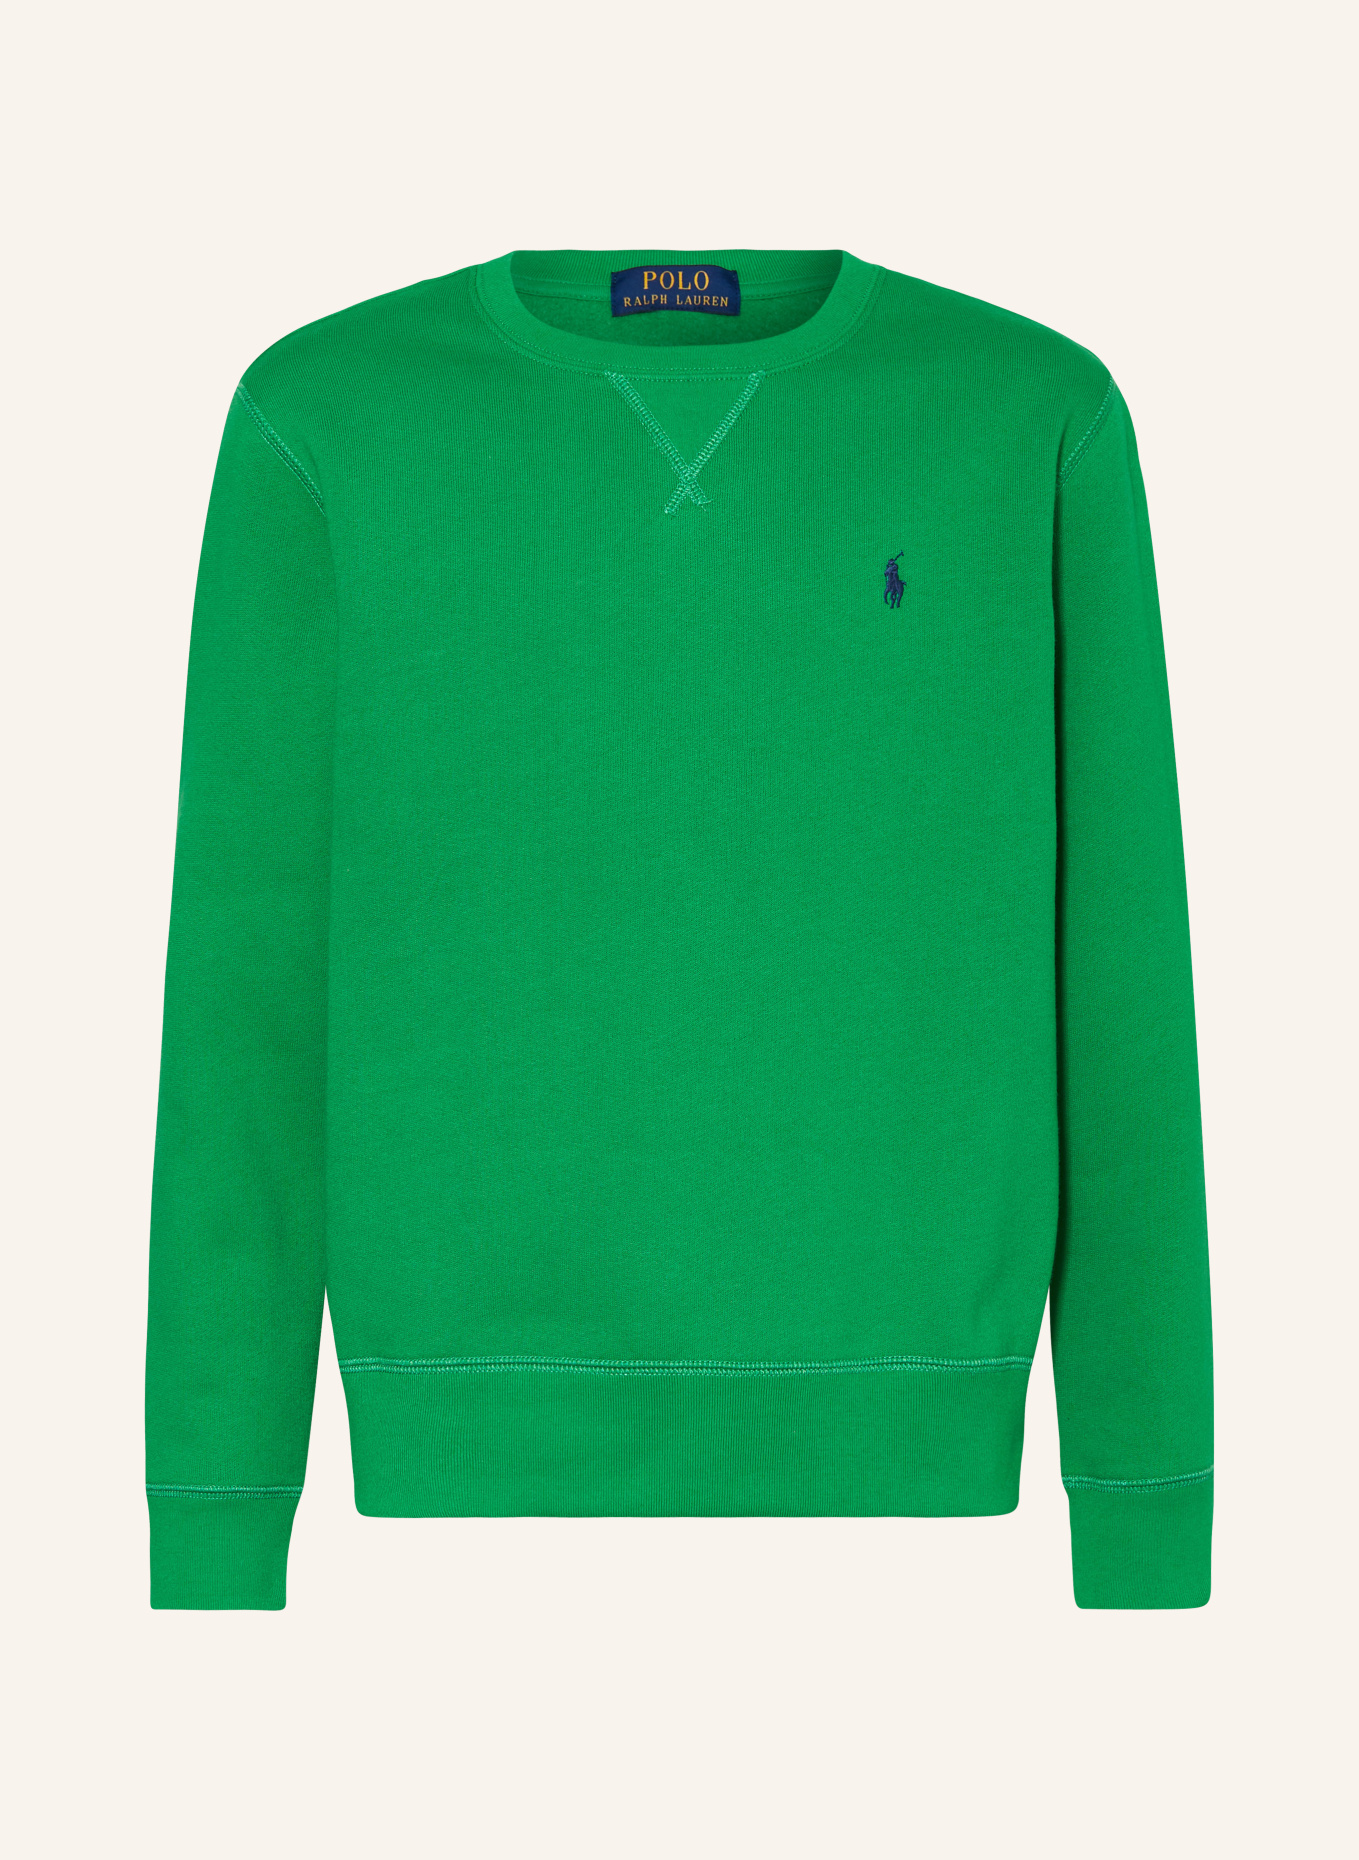 POLO RALPH LAUREN Sweatshirt, Farbe: GRÜN (Bild 1)